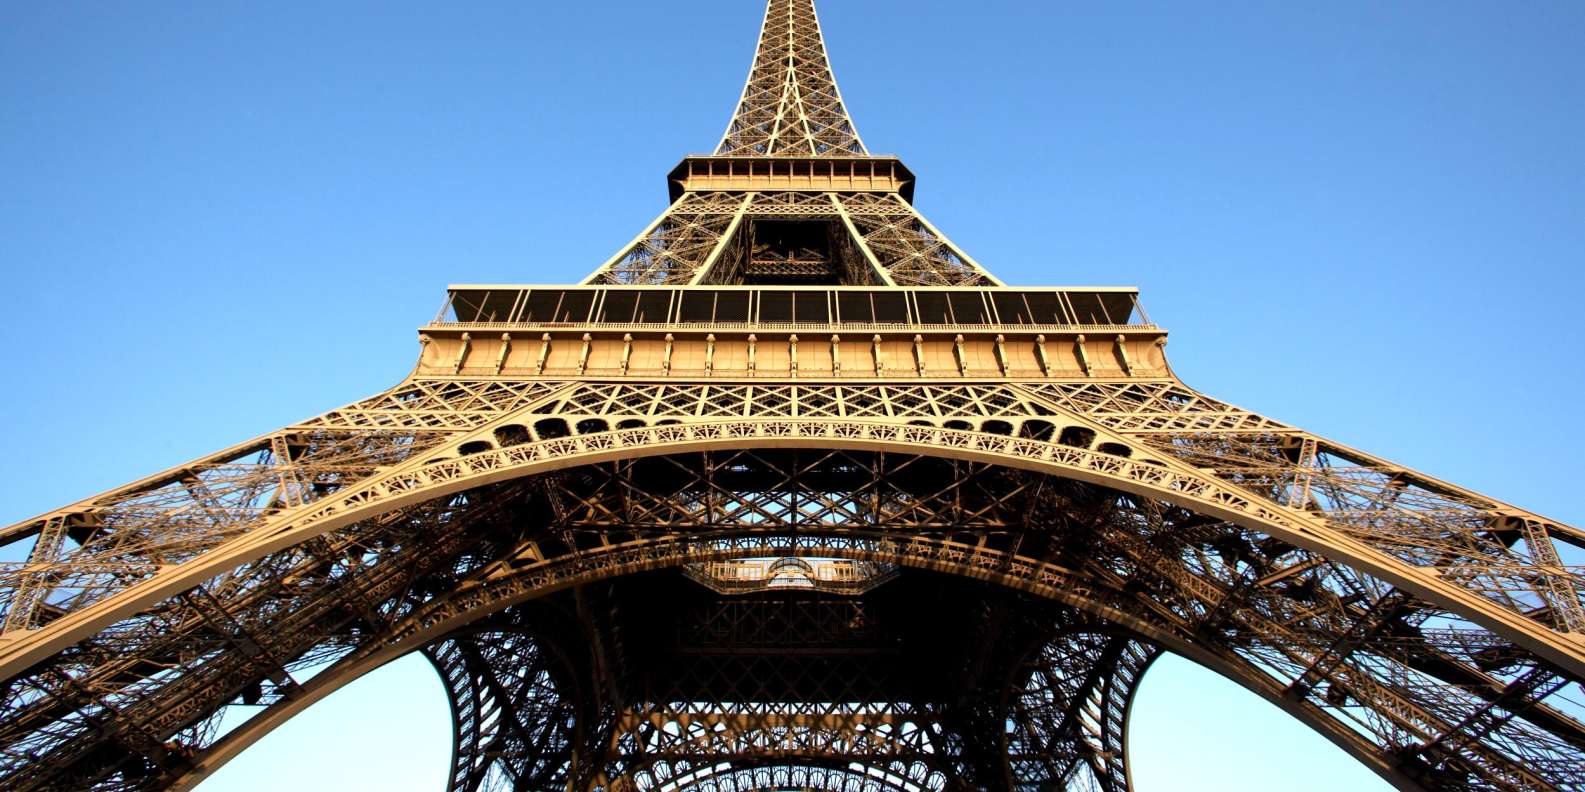 Eiffel Tower a la Louis Vuitton